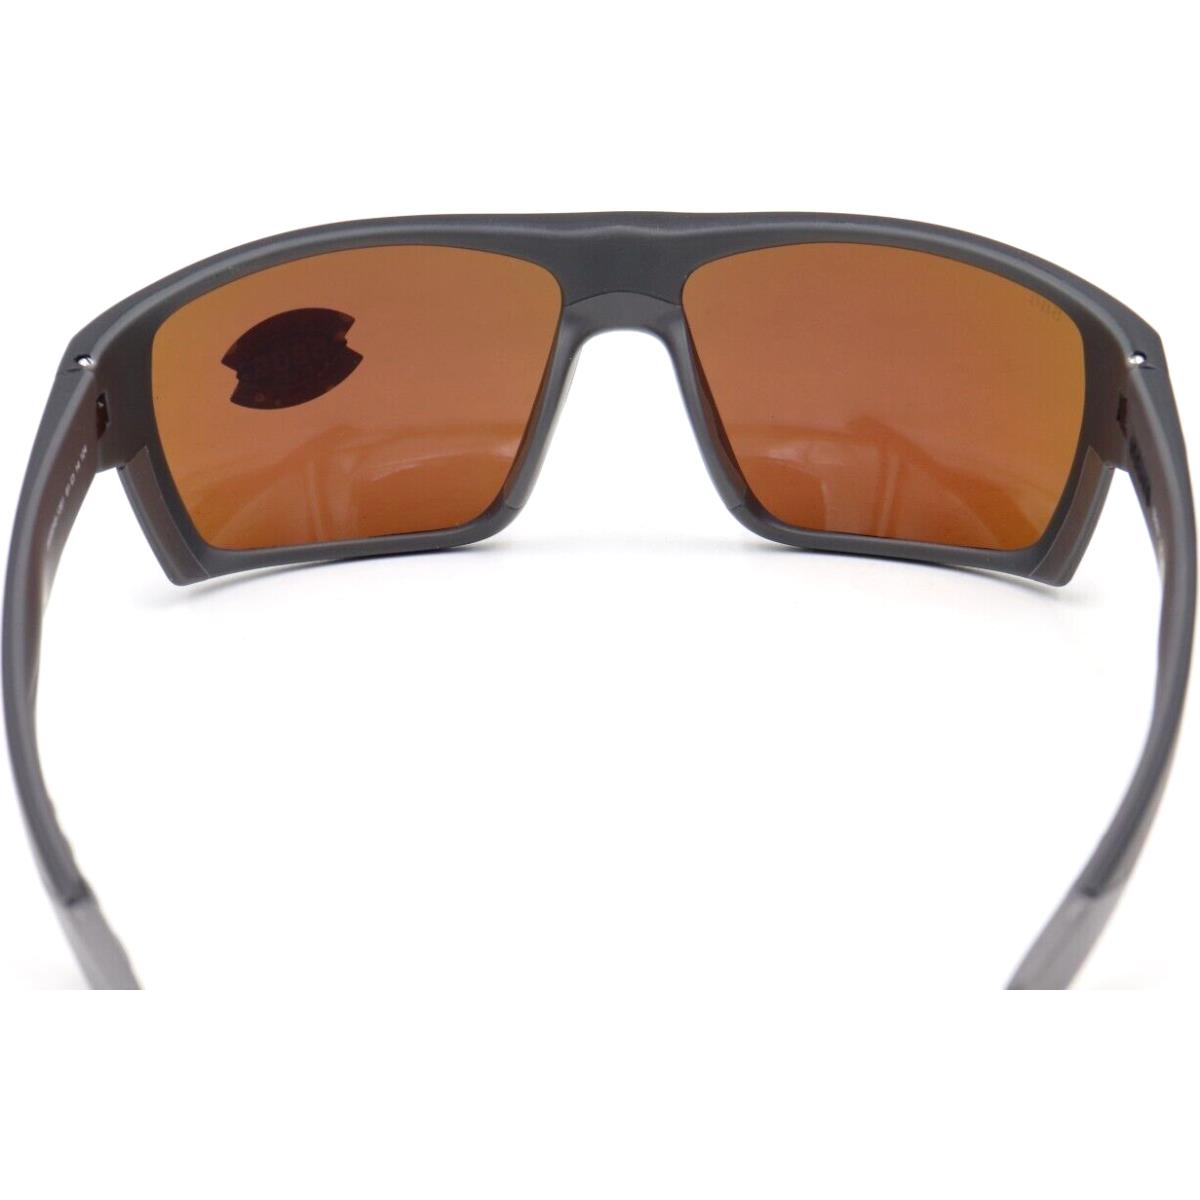 Costa Del Mar sunglasses BLACKFIN PRO - Matte black and gray Frame, Green Lens 1